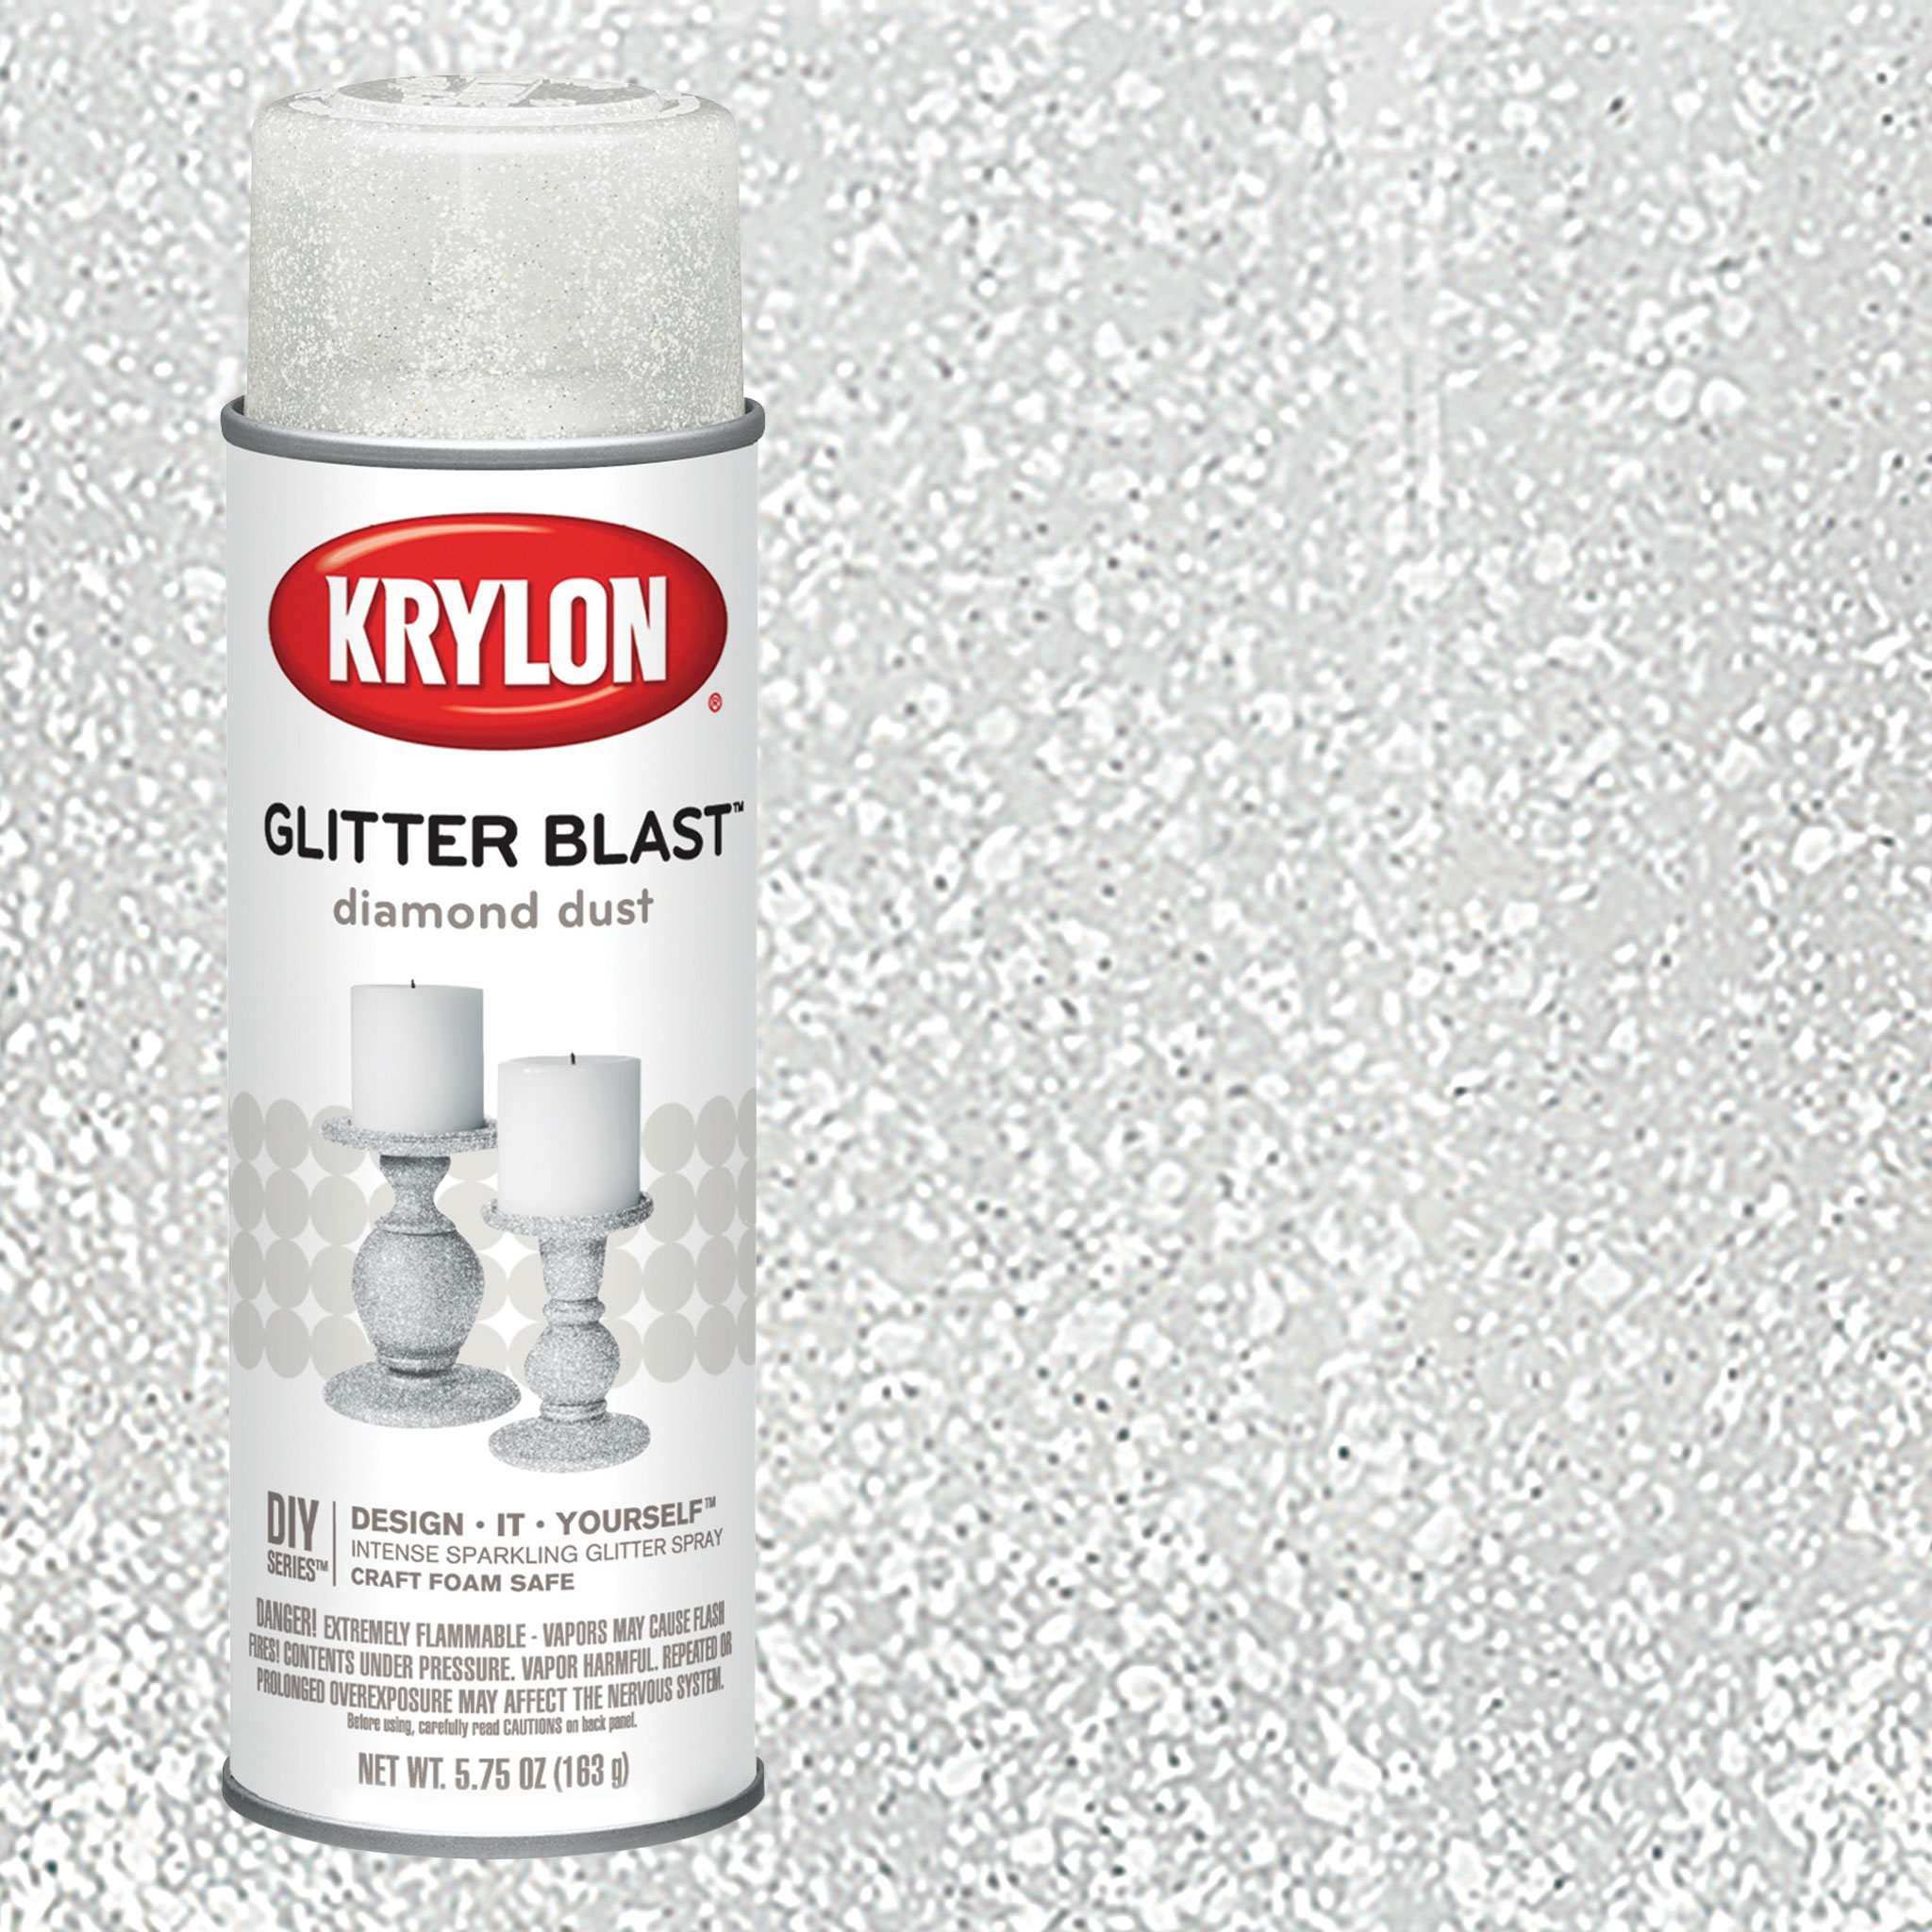 Krylon Glitter Blast Glitter Blast Gloss Diamond Dust Glitter (NET